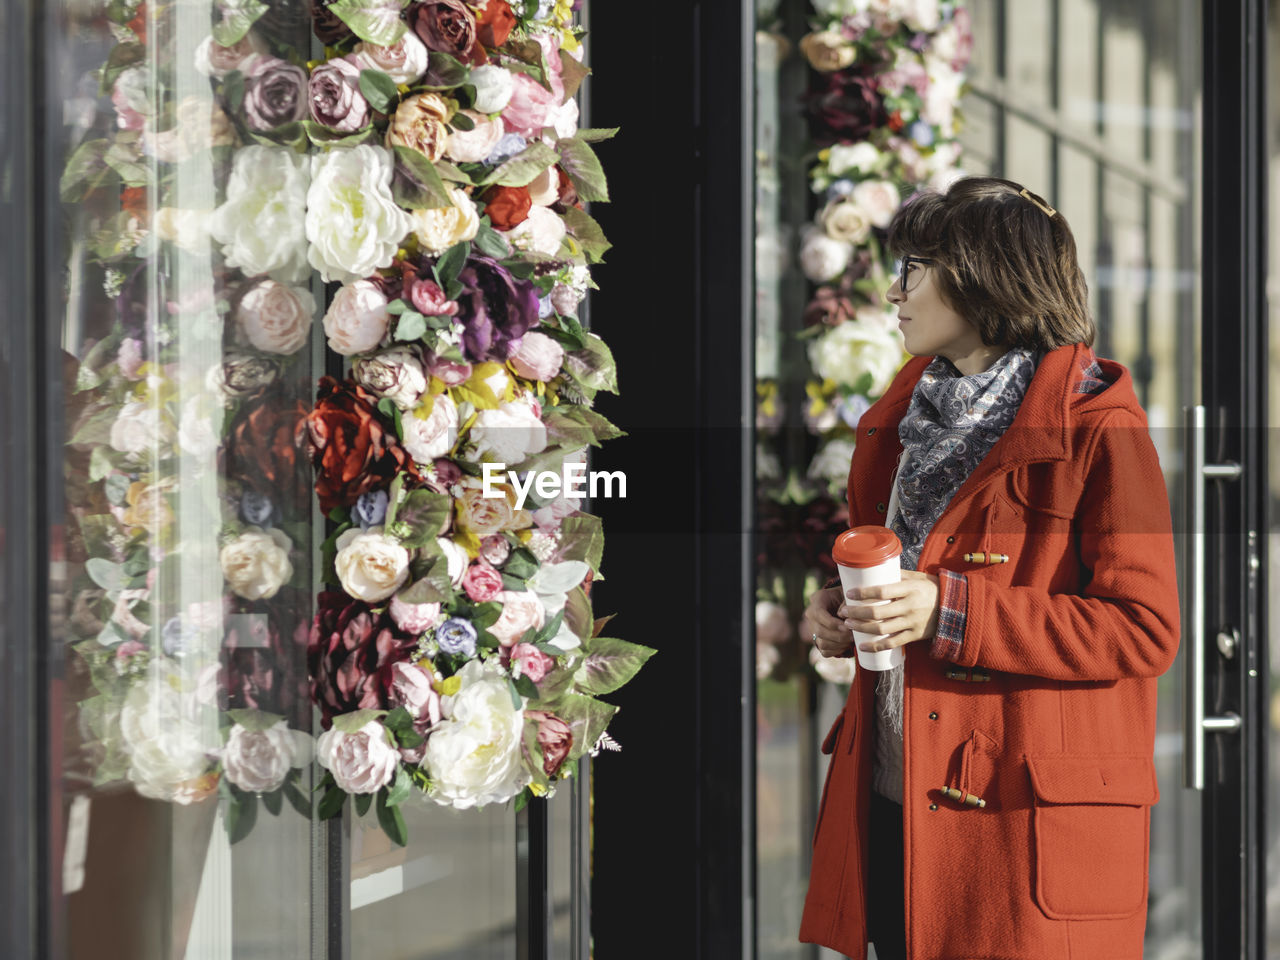 Woman in red duffle coat walks pass florist shop. woman goes along sunny side of street